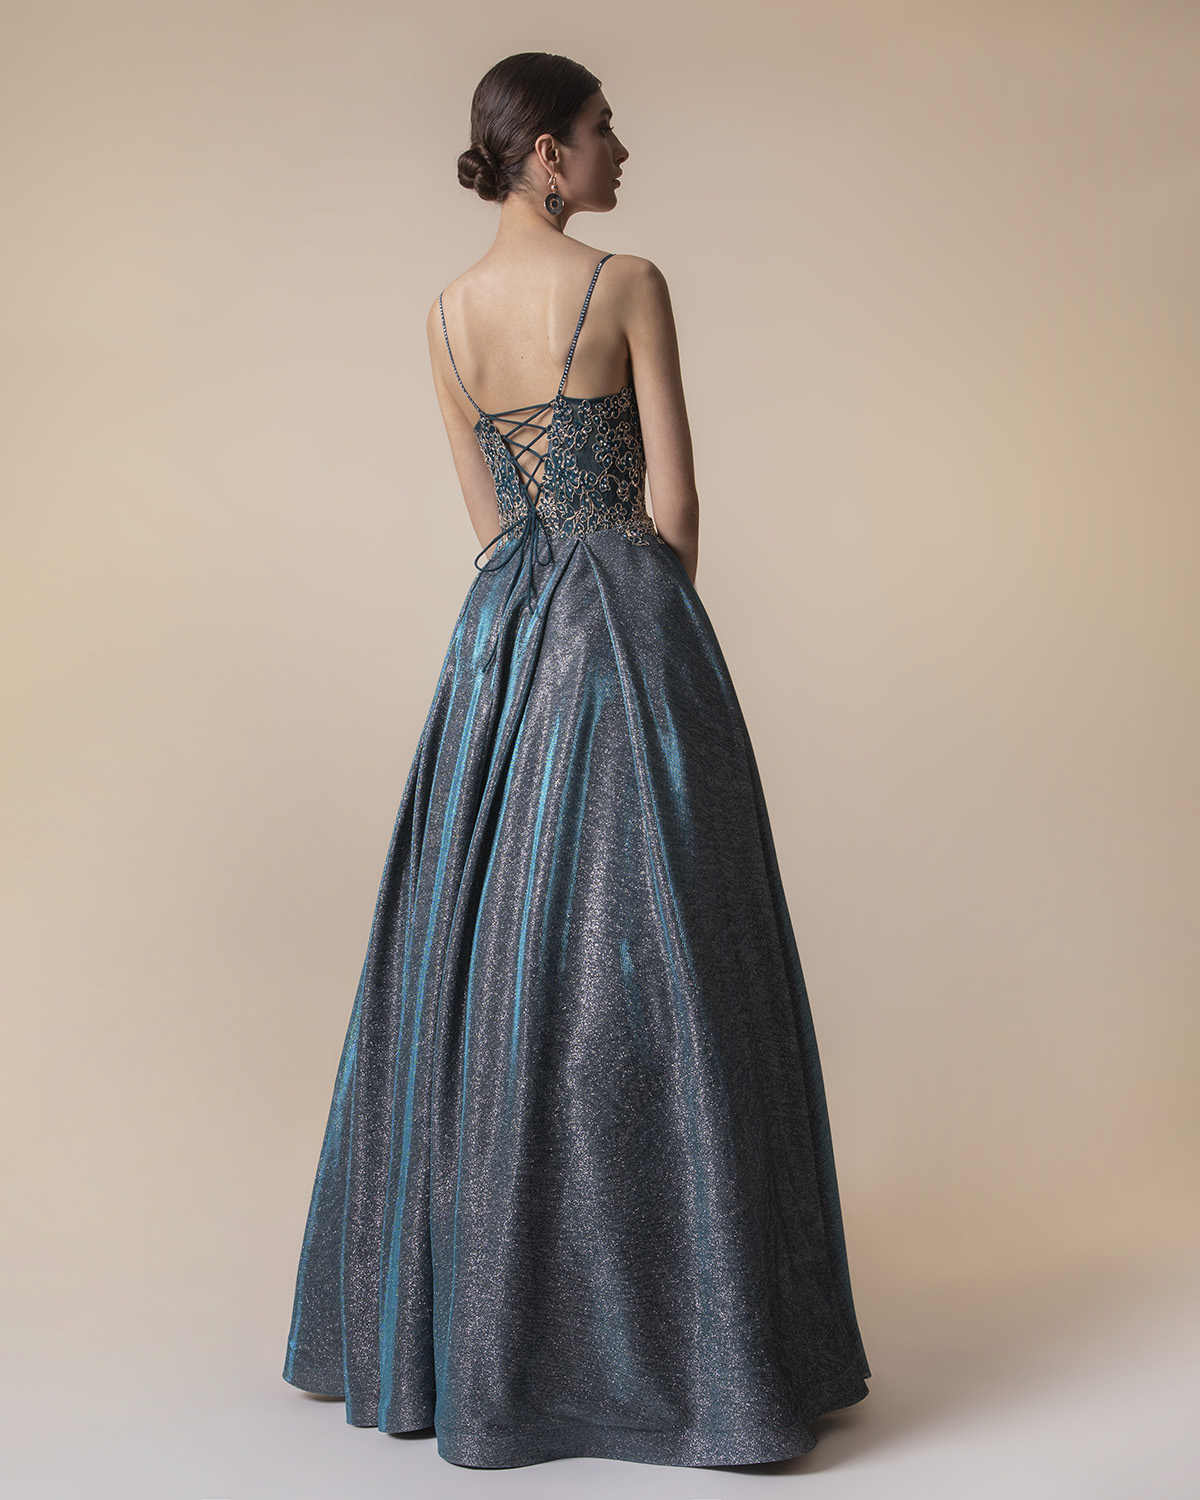 Вечерние платья / Long evening dress with shining fabric, applique beaded lace on the top